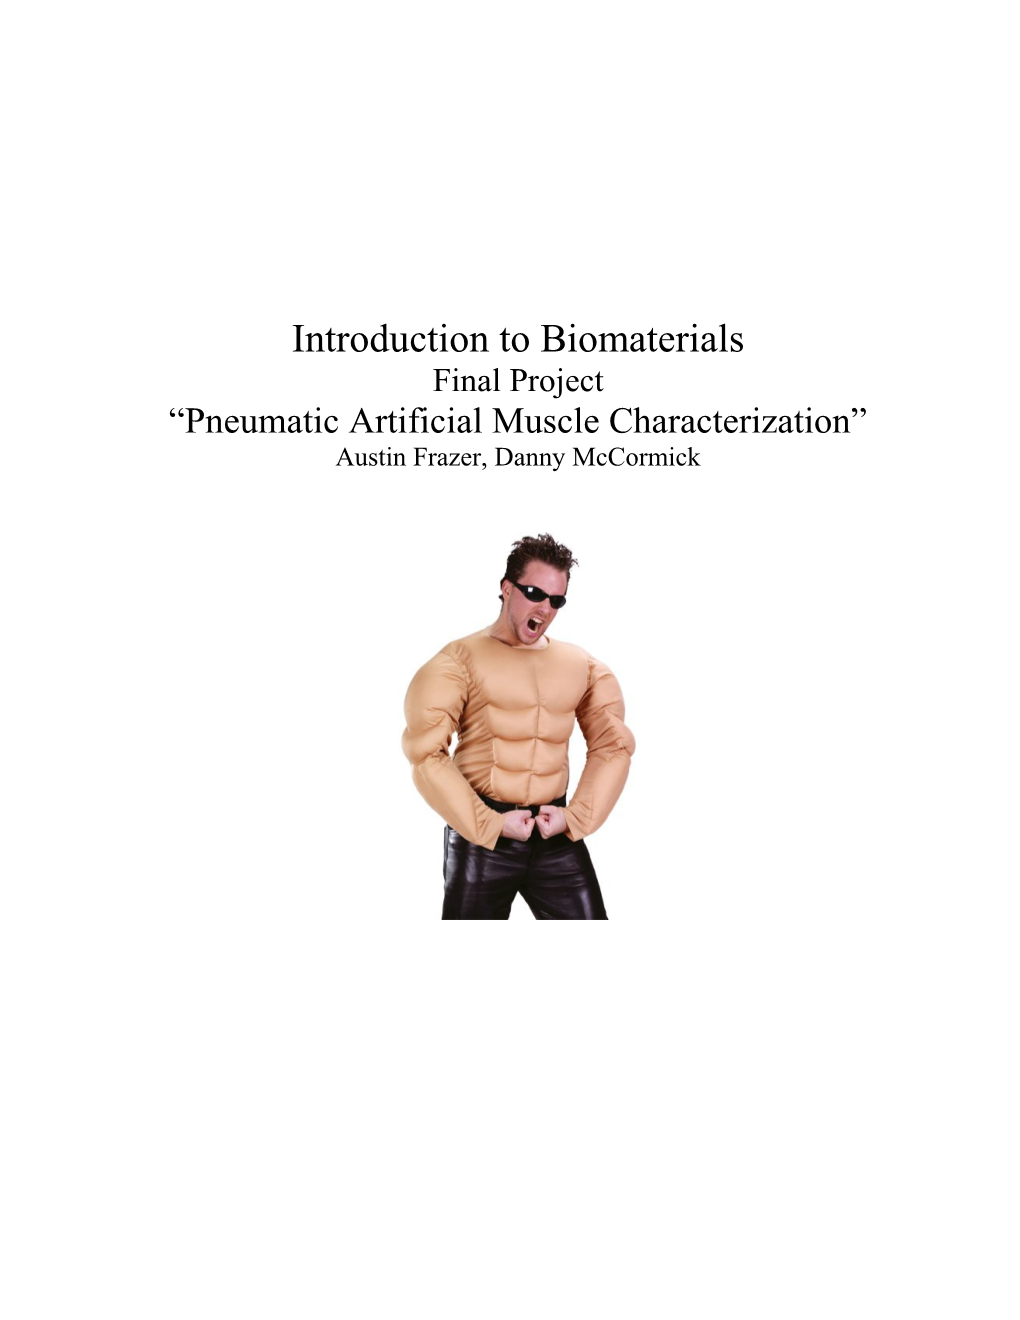 Pneumatic Artificial Muscle Characterization